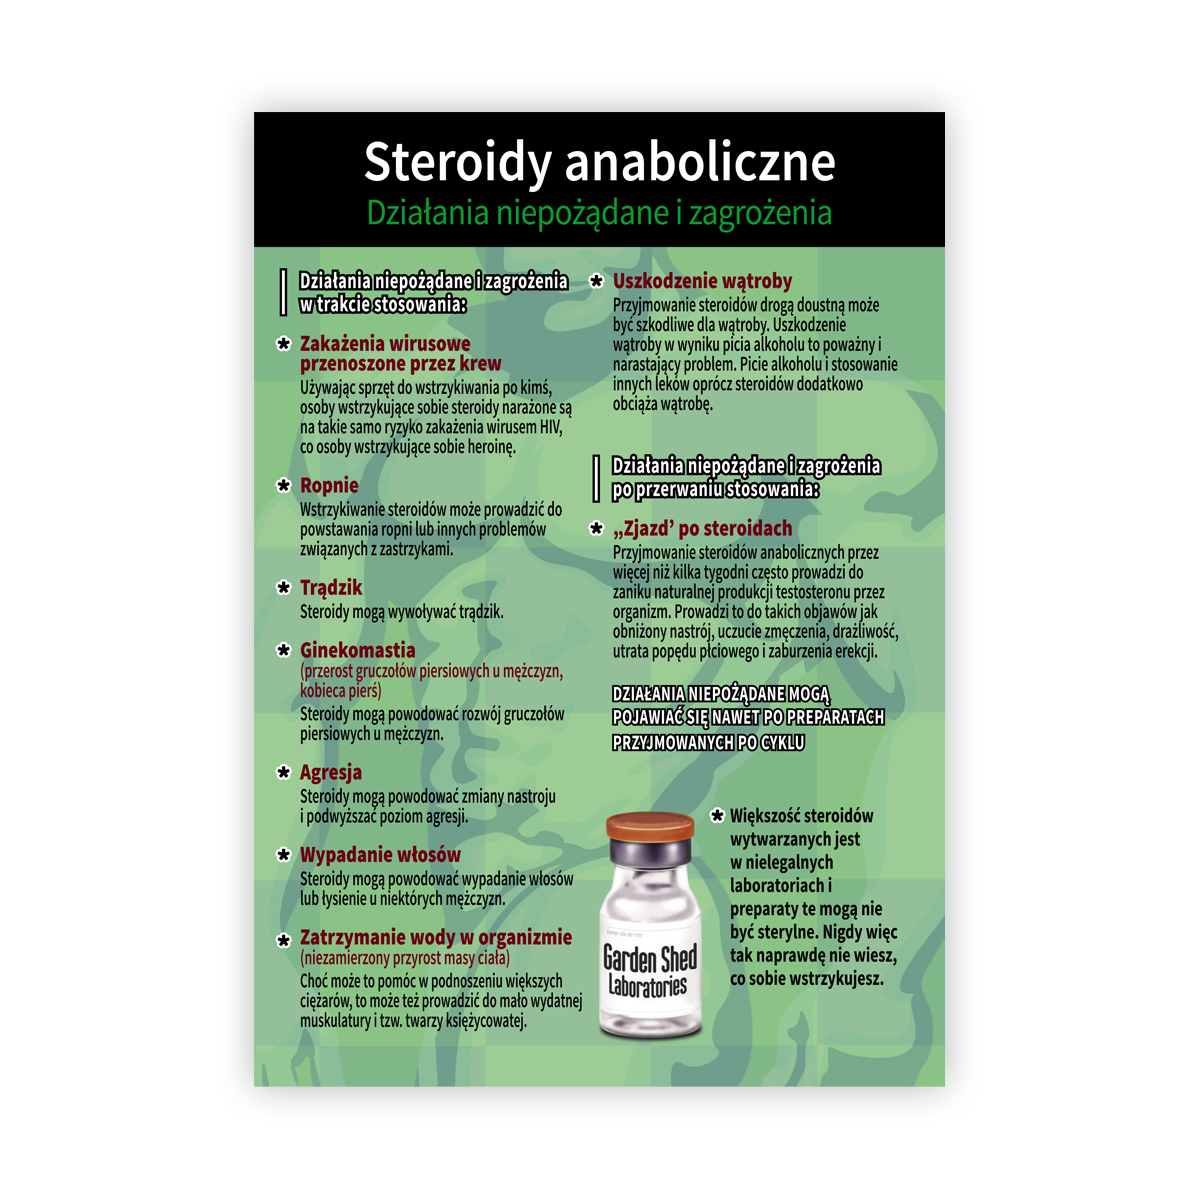 Safer Steroids Card (Polish language version)